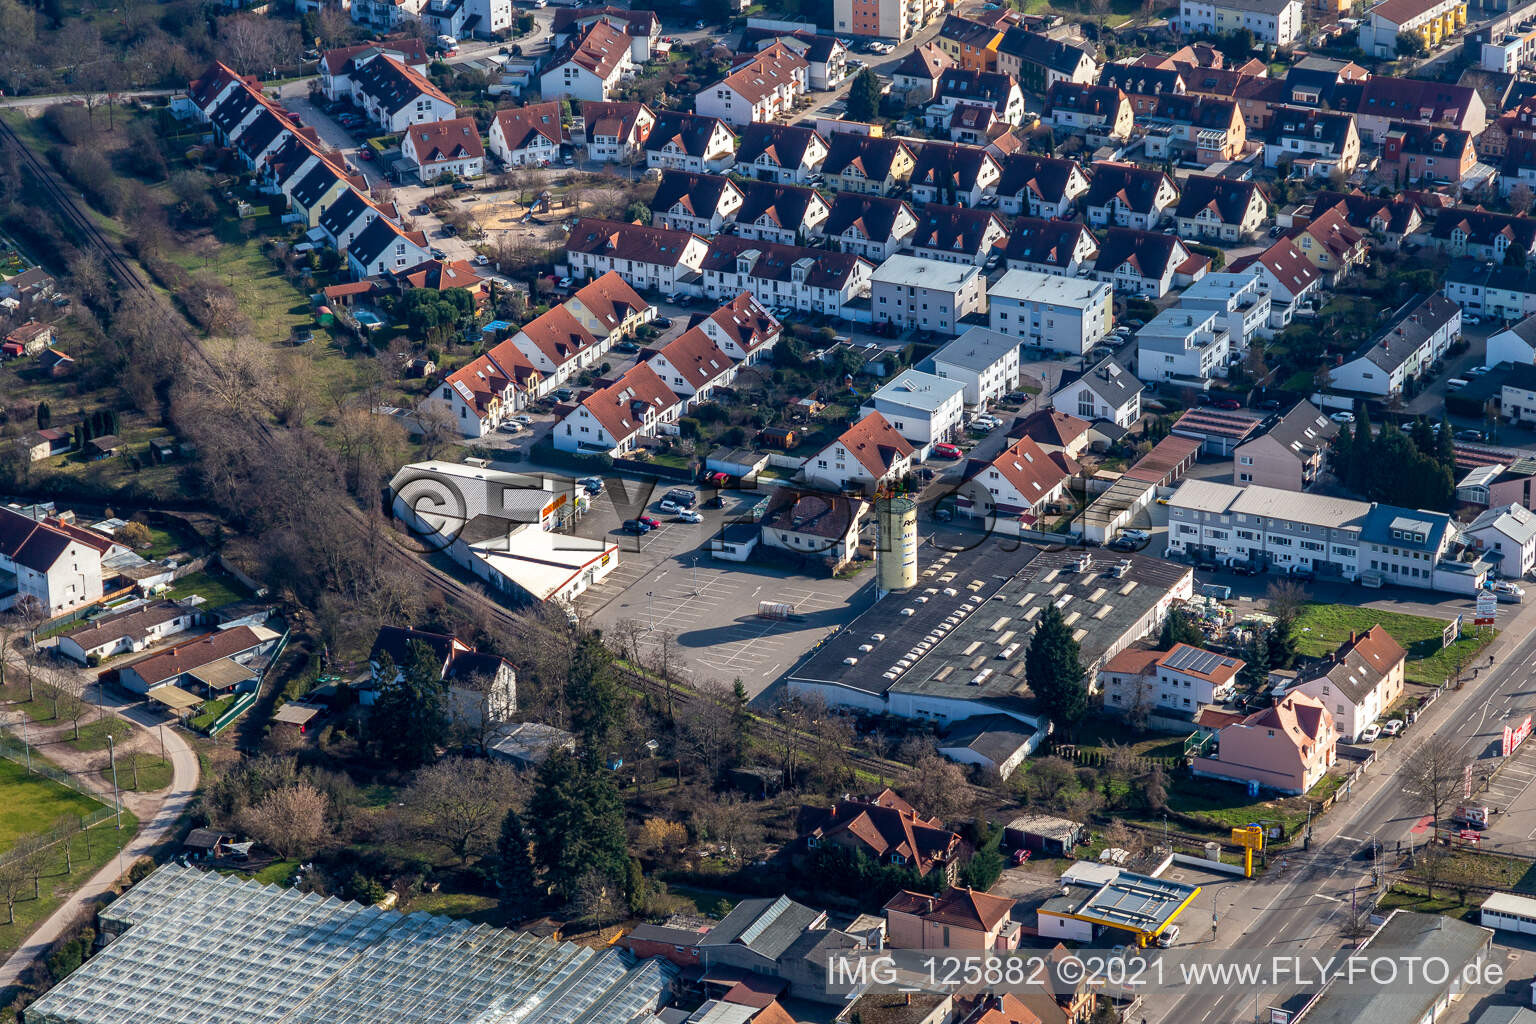 Ancien site Promarkt sur Rabensteinerweg à Speyer dans le département Rhénanie-Palatinat, Allemagne hors des airs